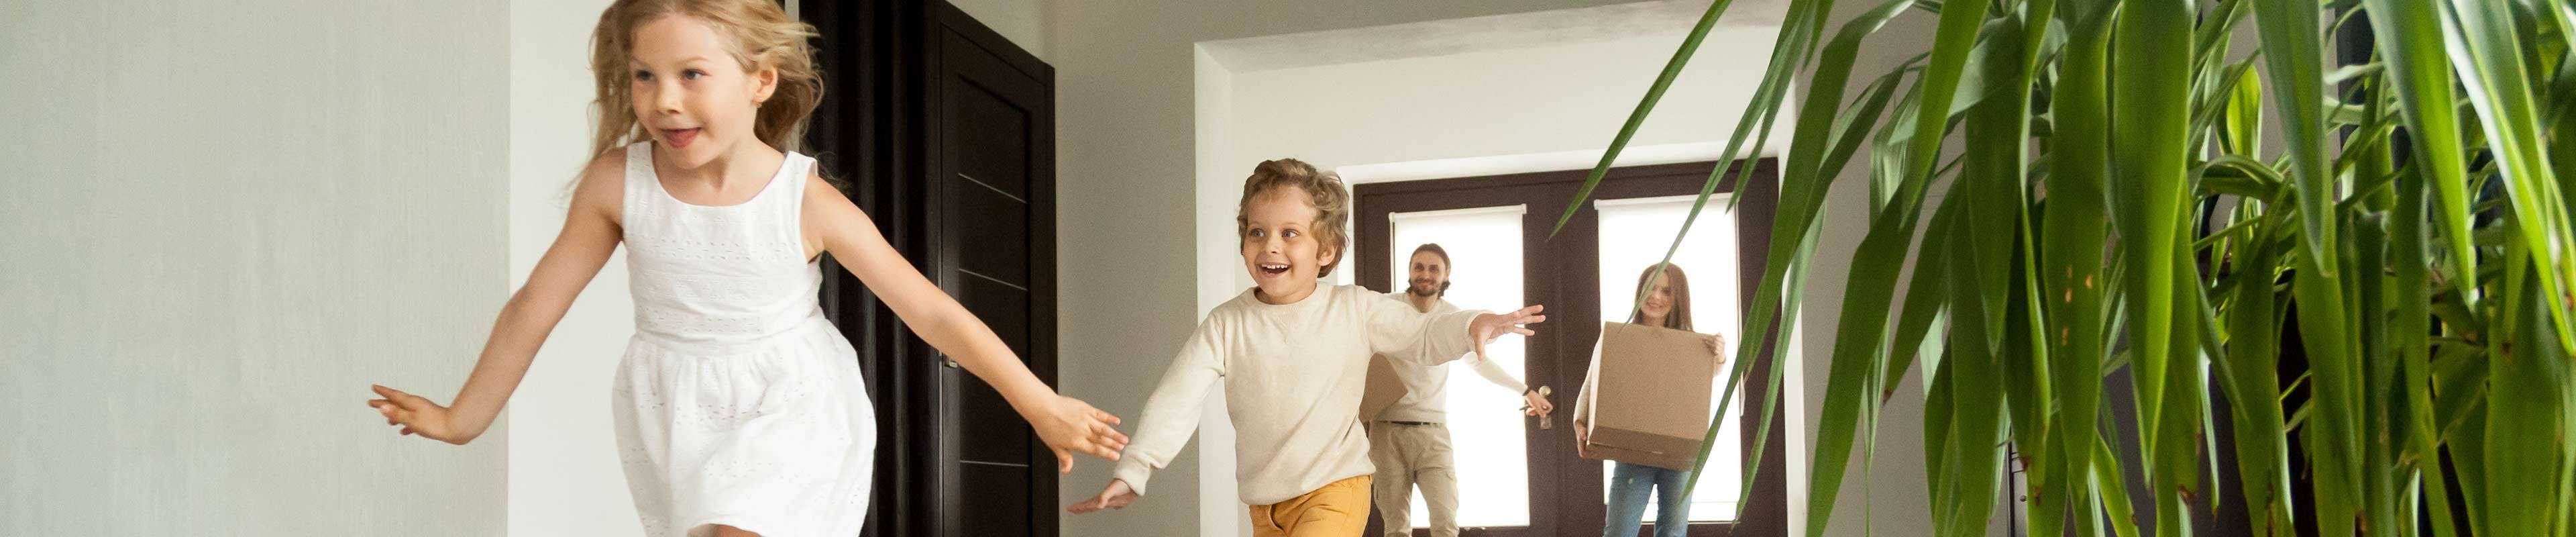 Children running in a new home